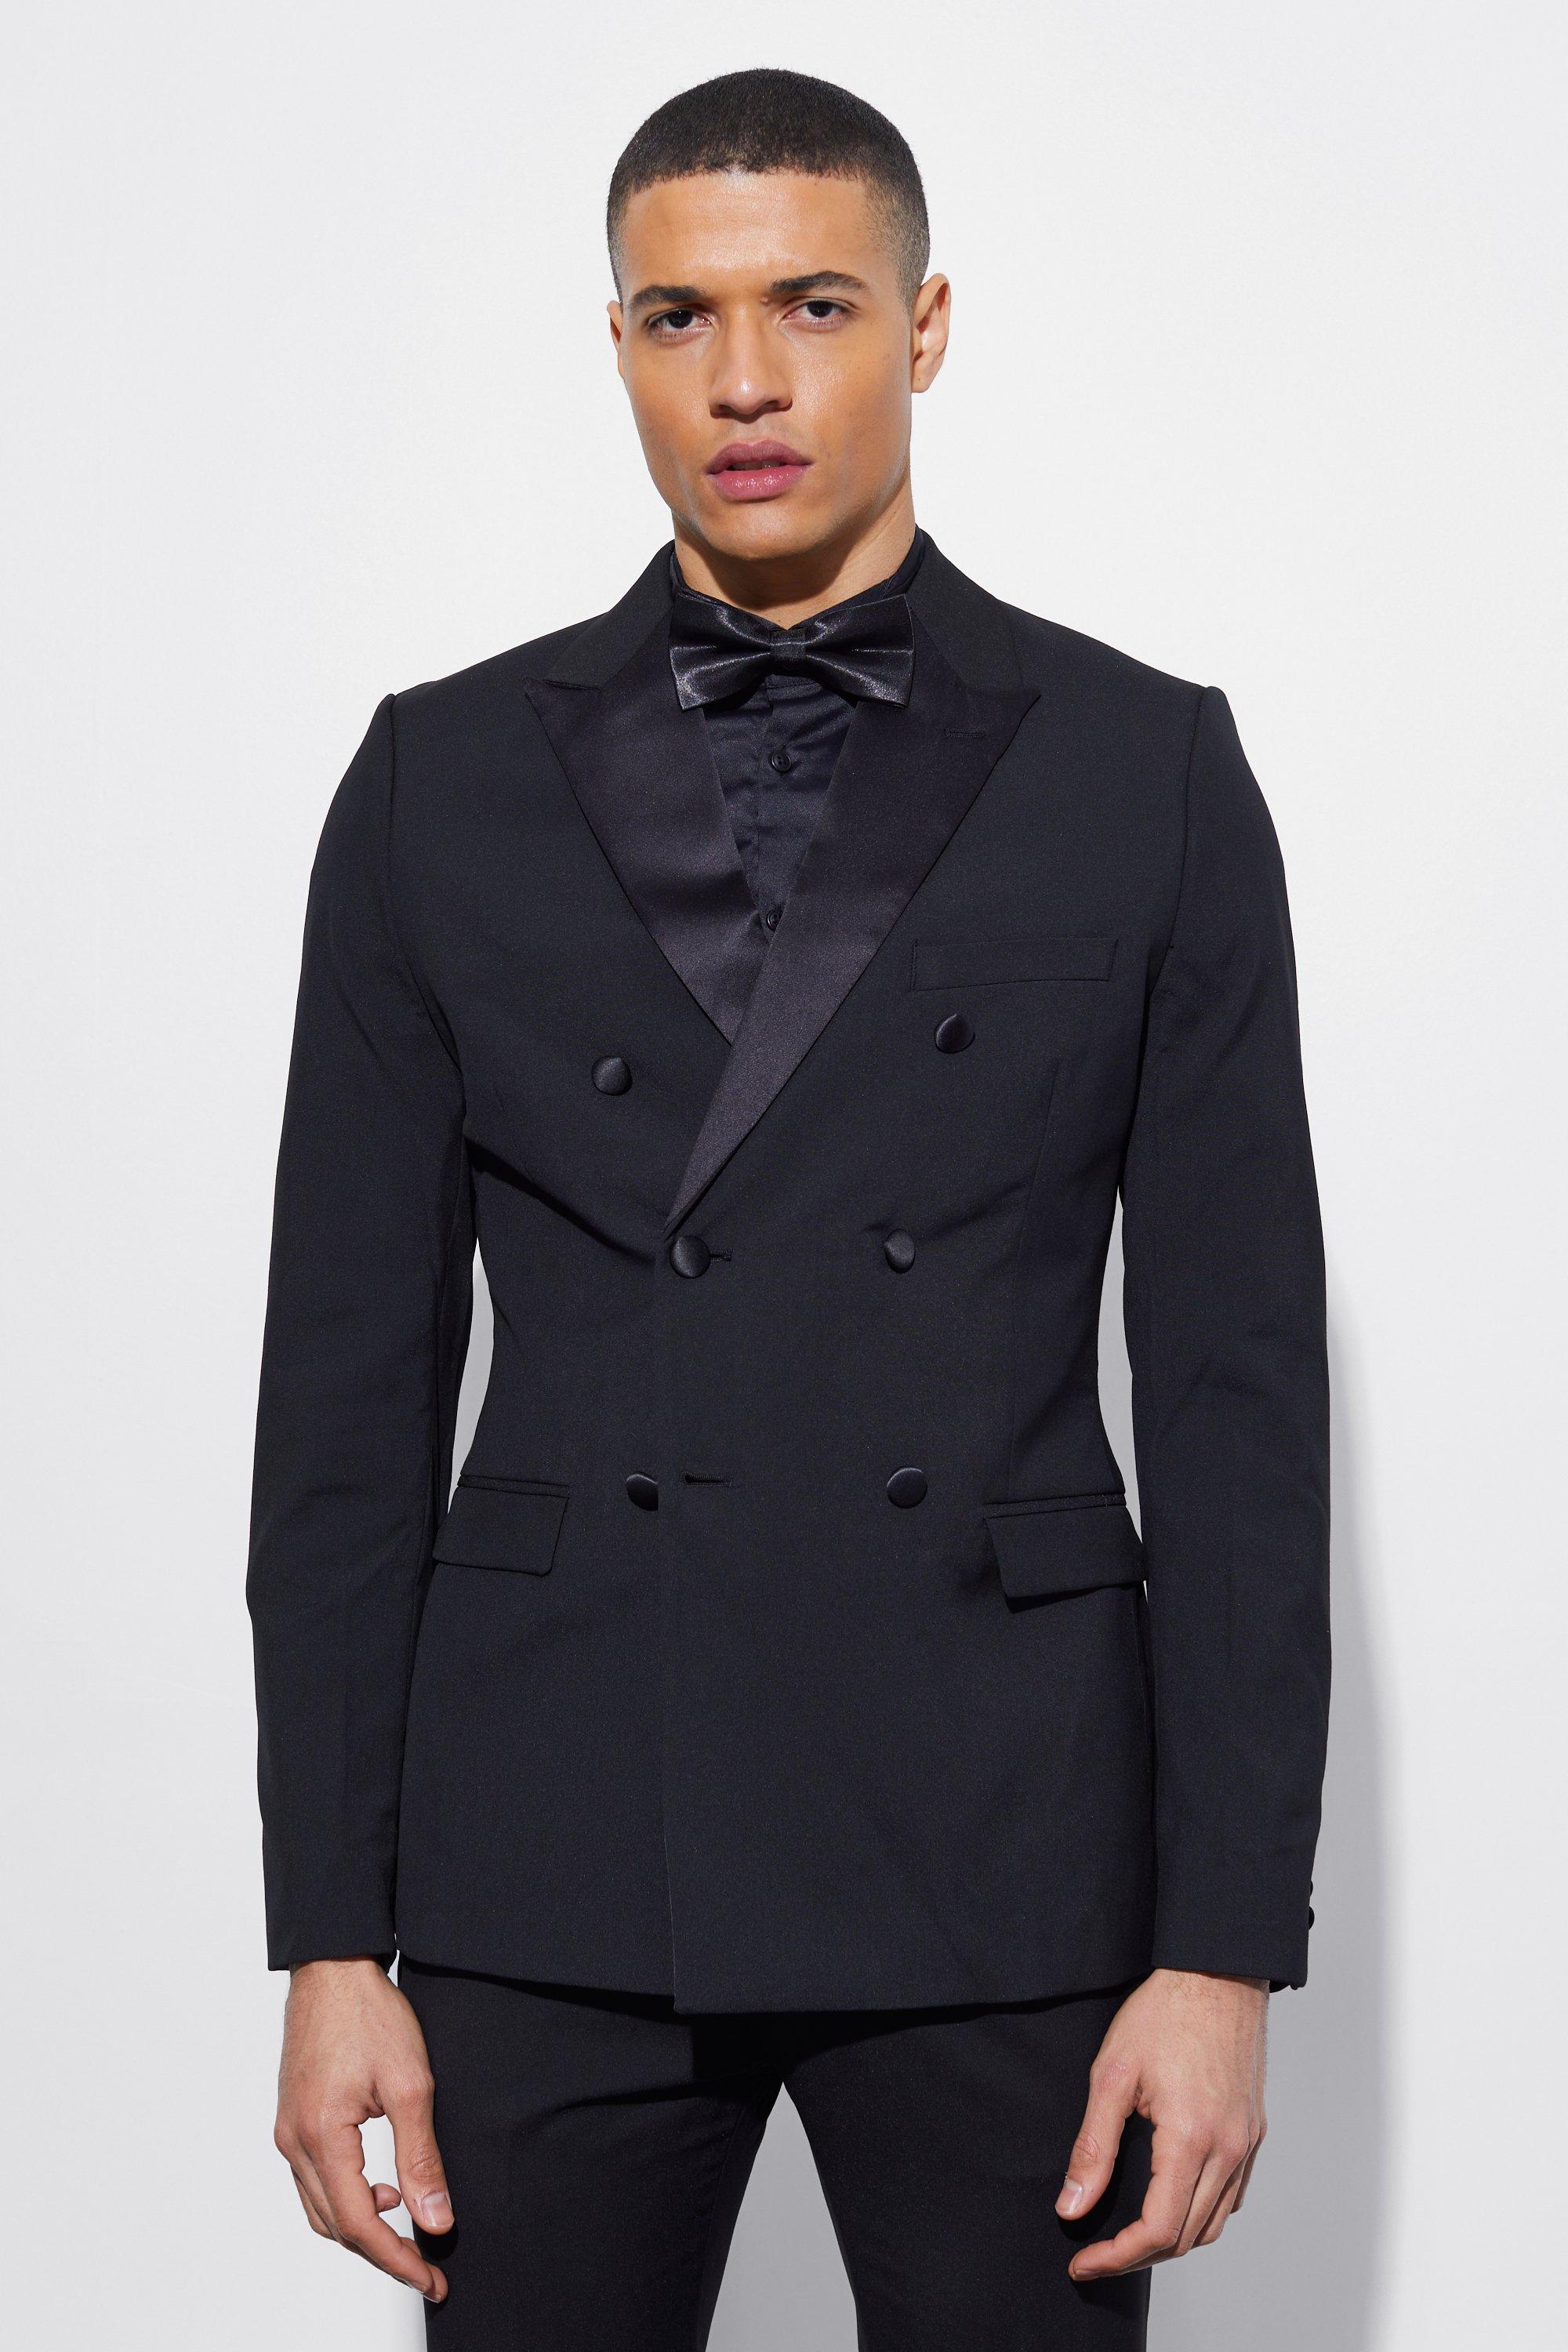 men's skinny tuxedo double breasted suit jacket - black - 34, black